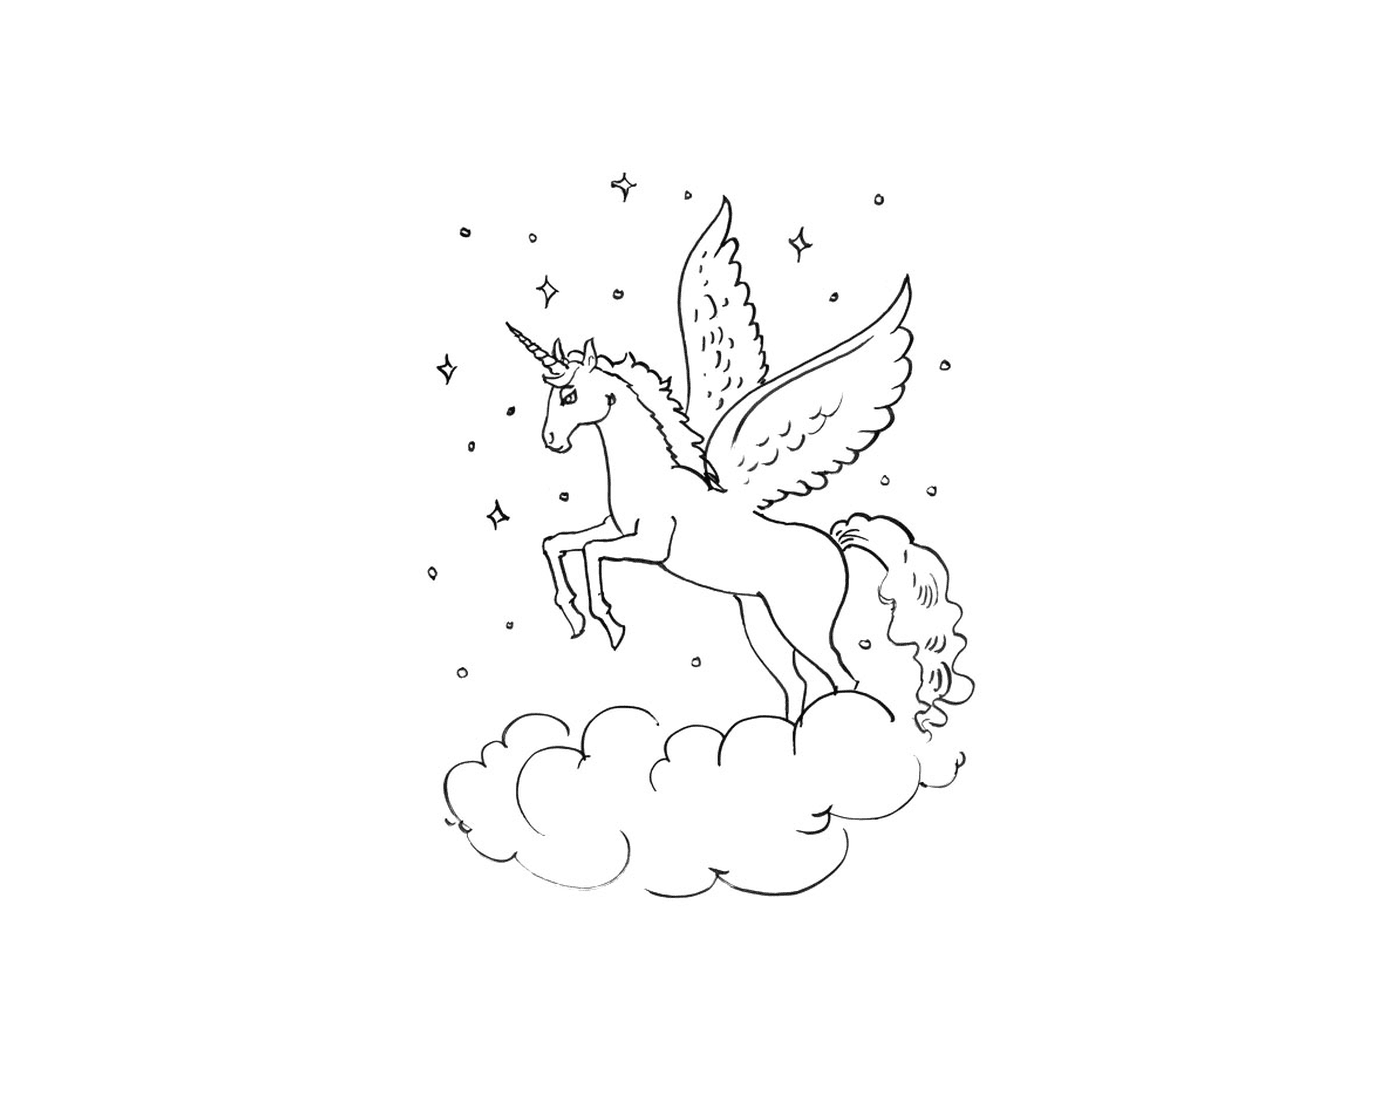  unicornio con alas volando sobre una nube 